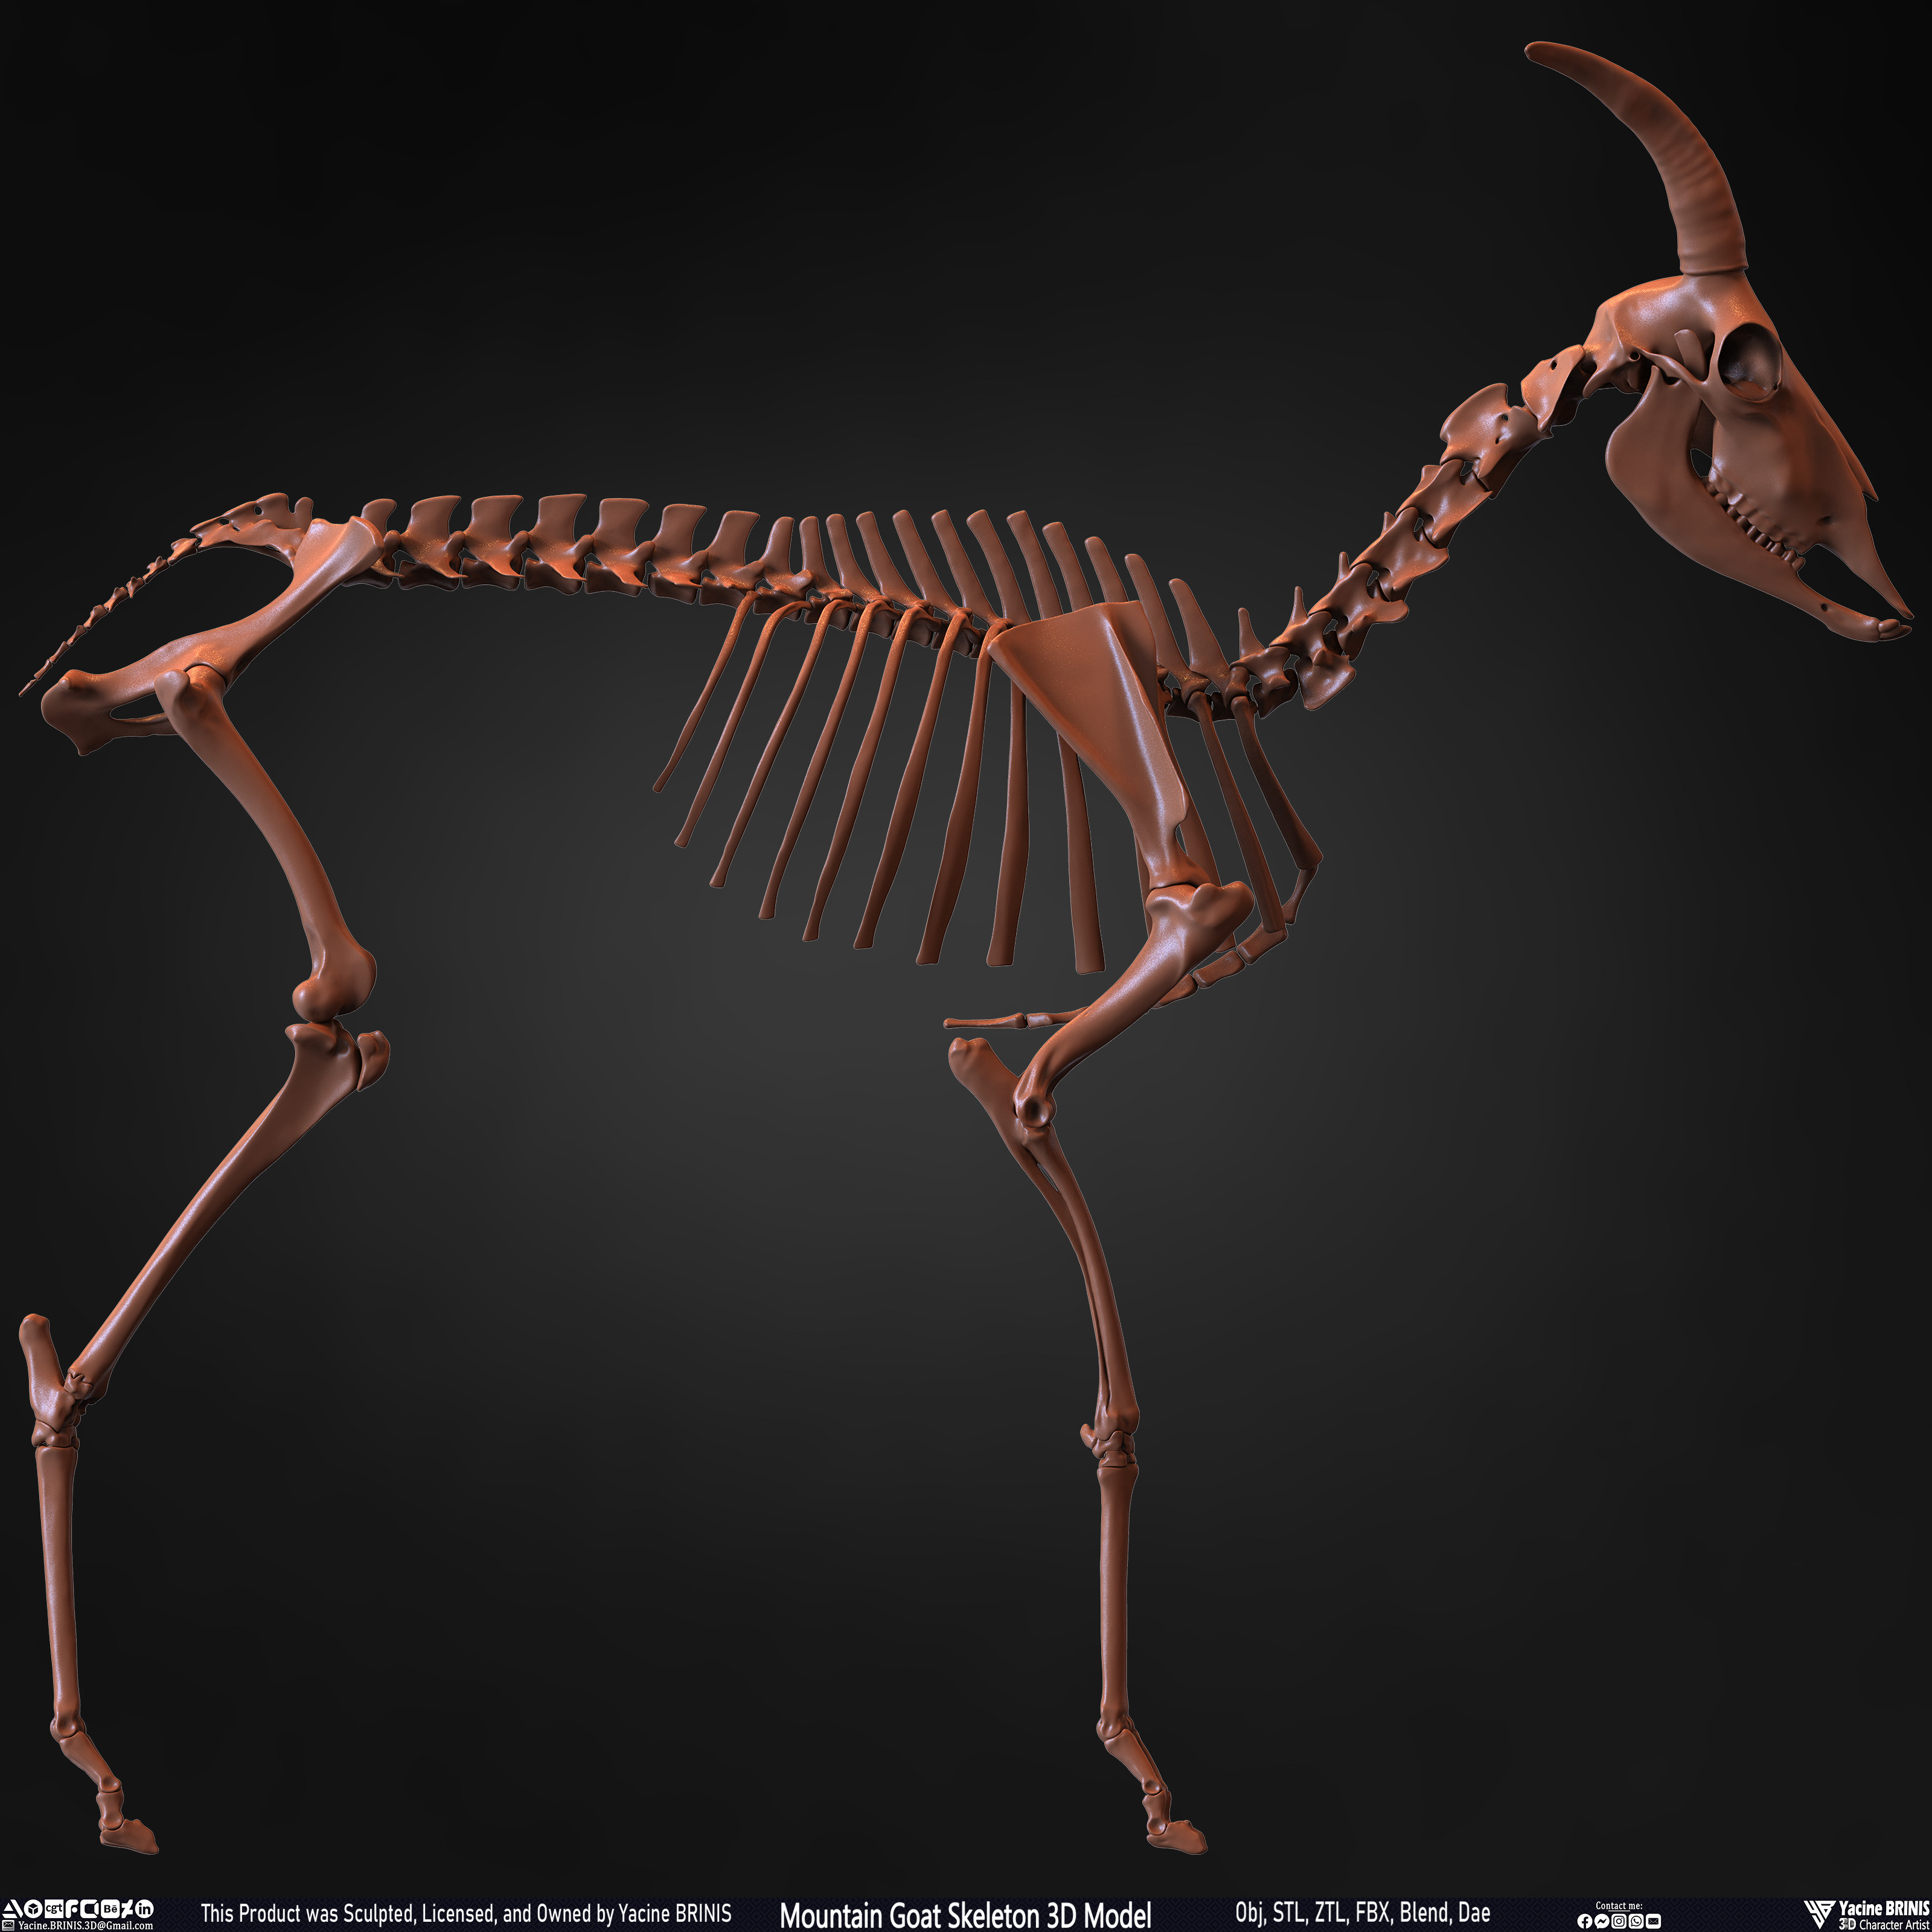 Mountain Goat Skeleton 3D Model Sculpted by Yacine BRINIS Set 035